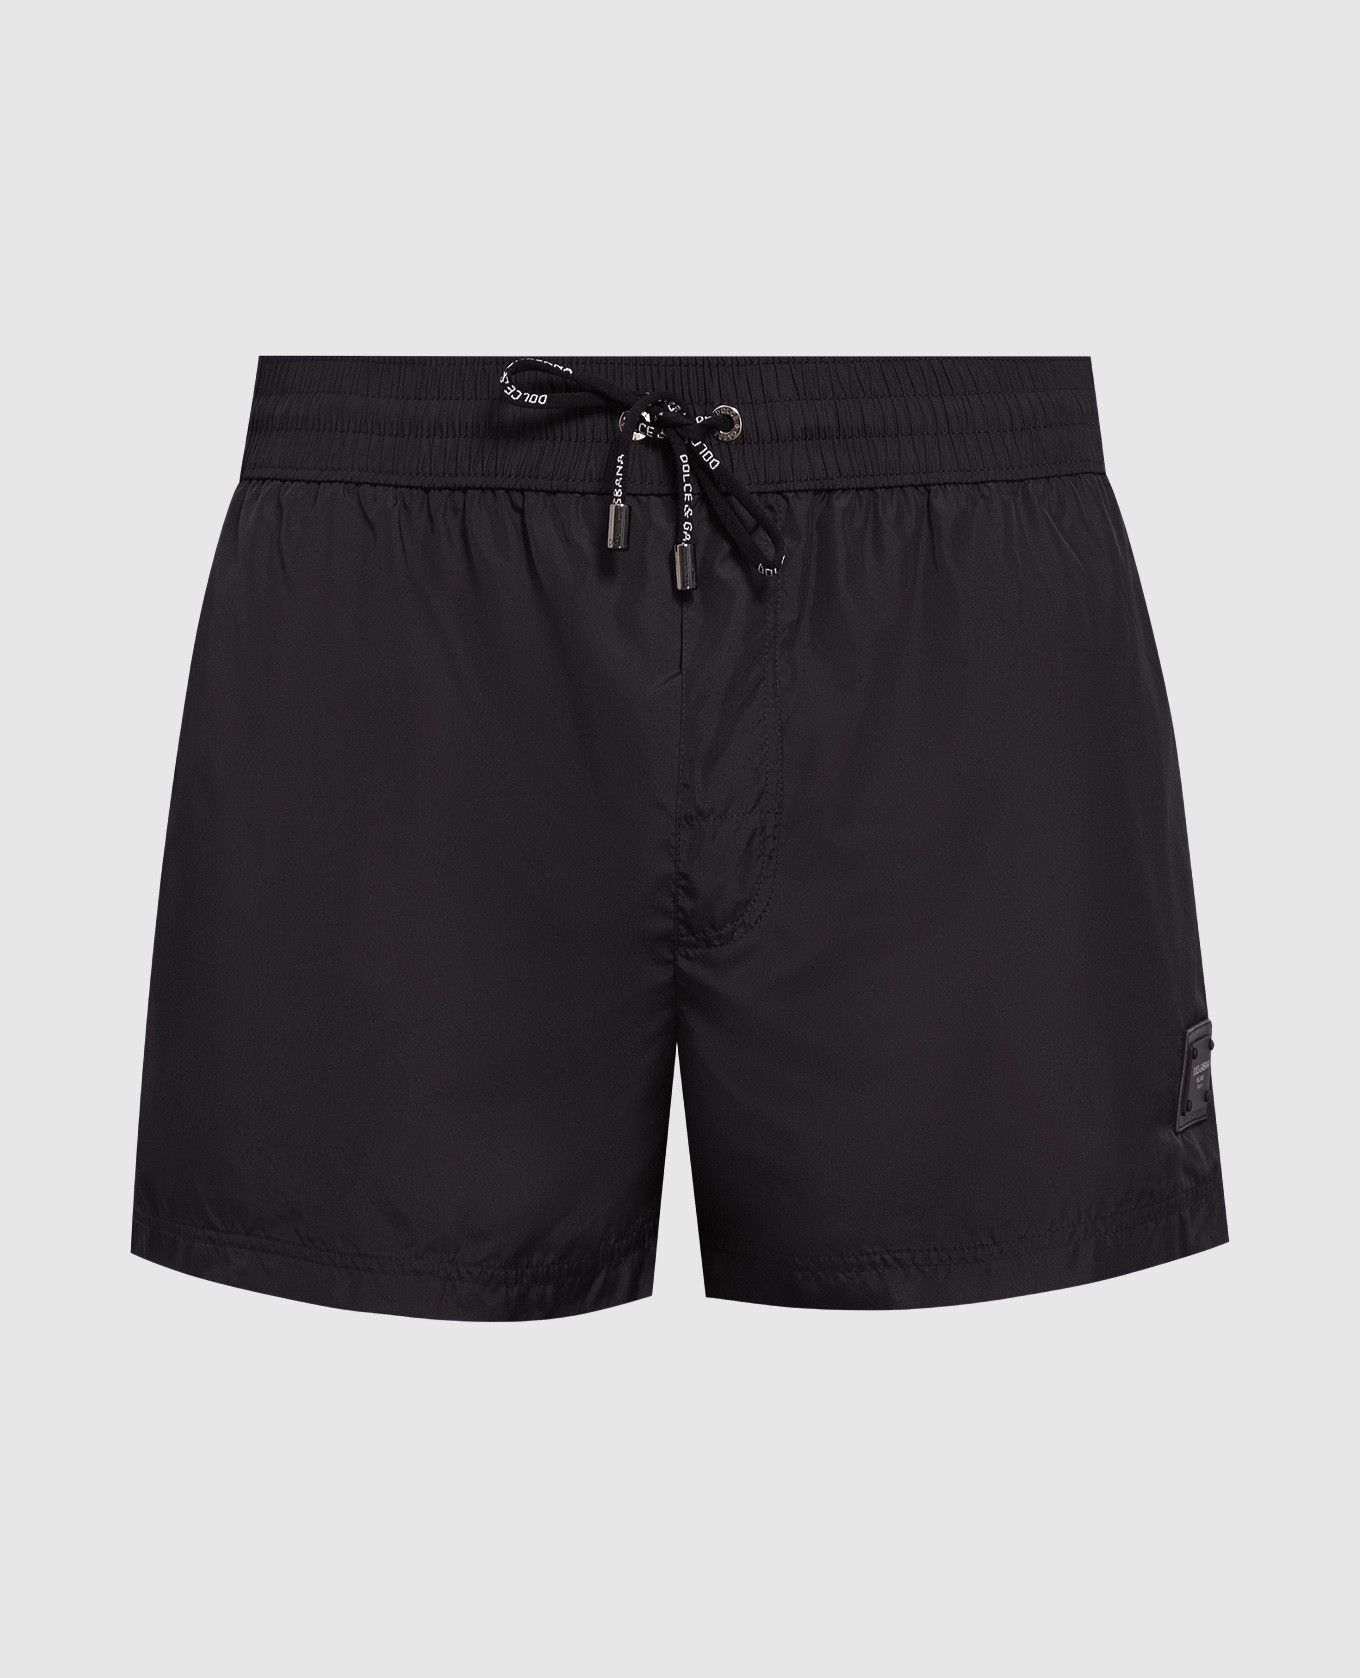 Black swim shorts with logo patch